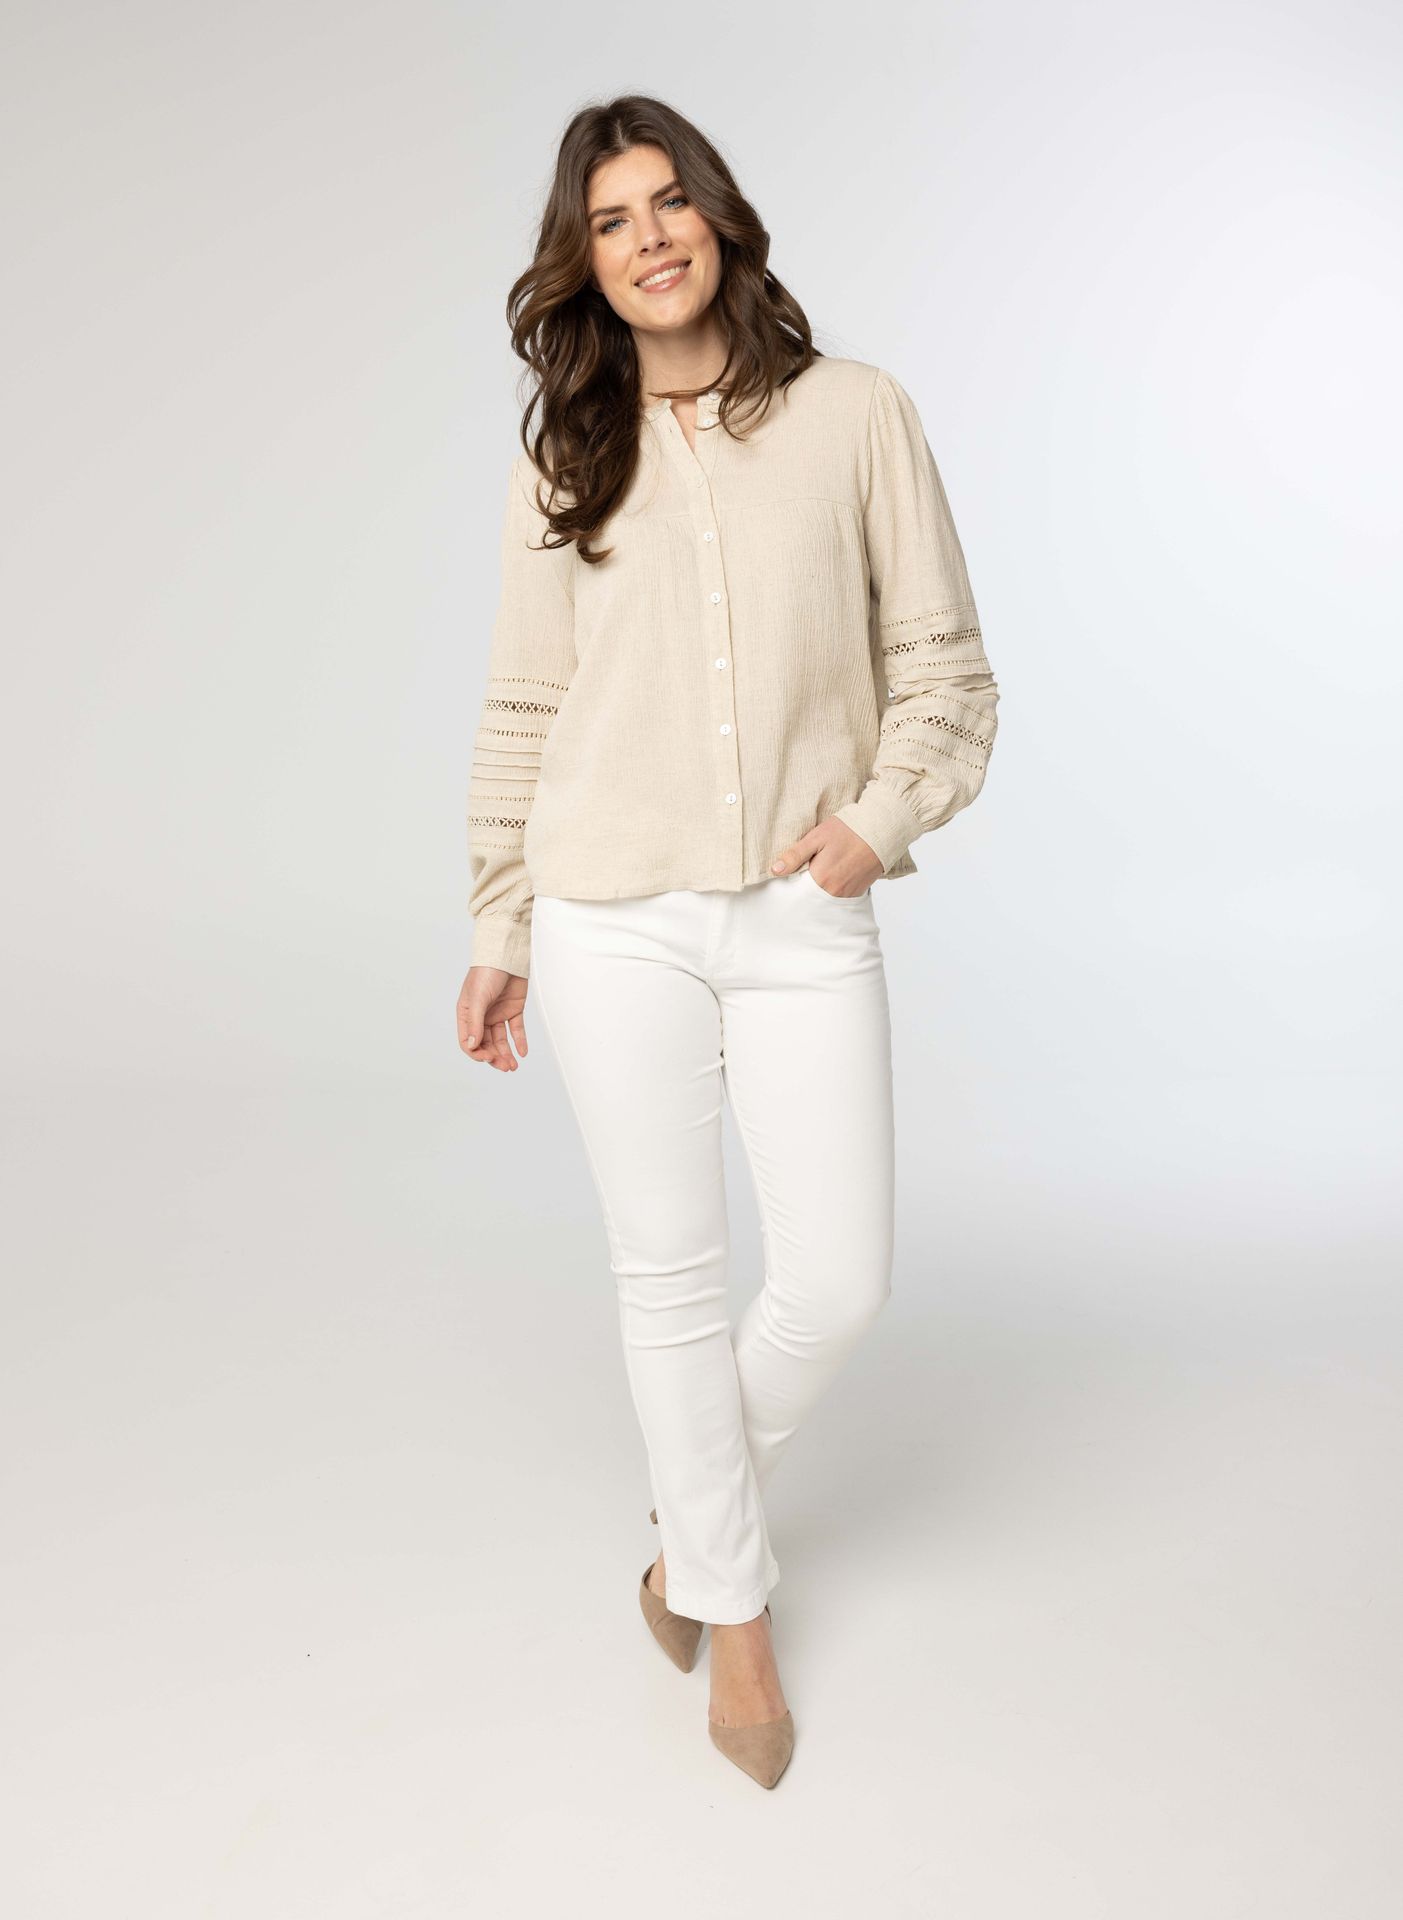 Norah Zandkleurige blouse sand 213957-110